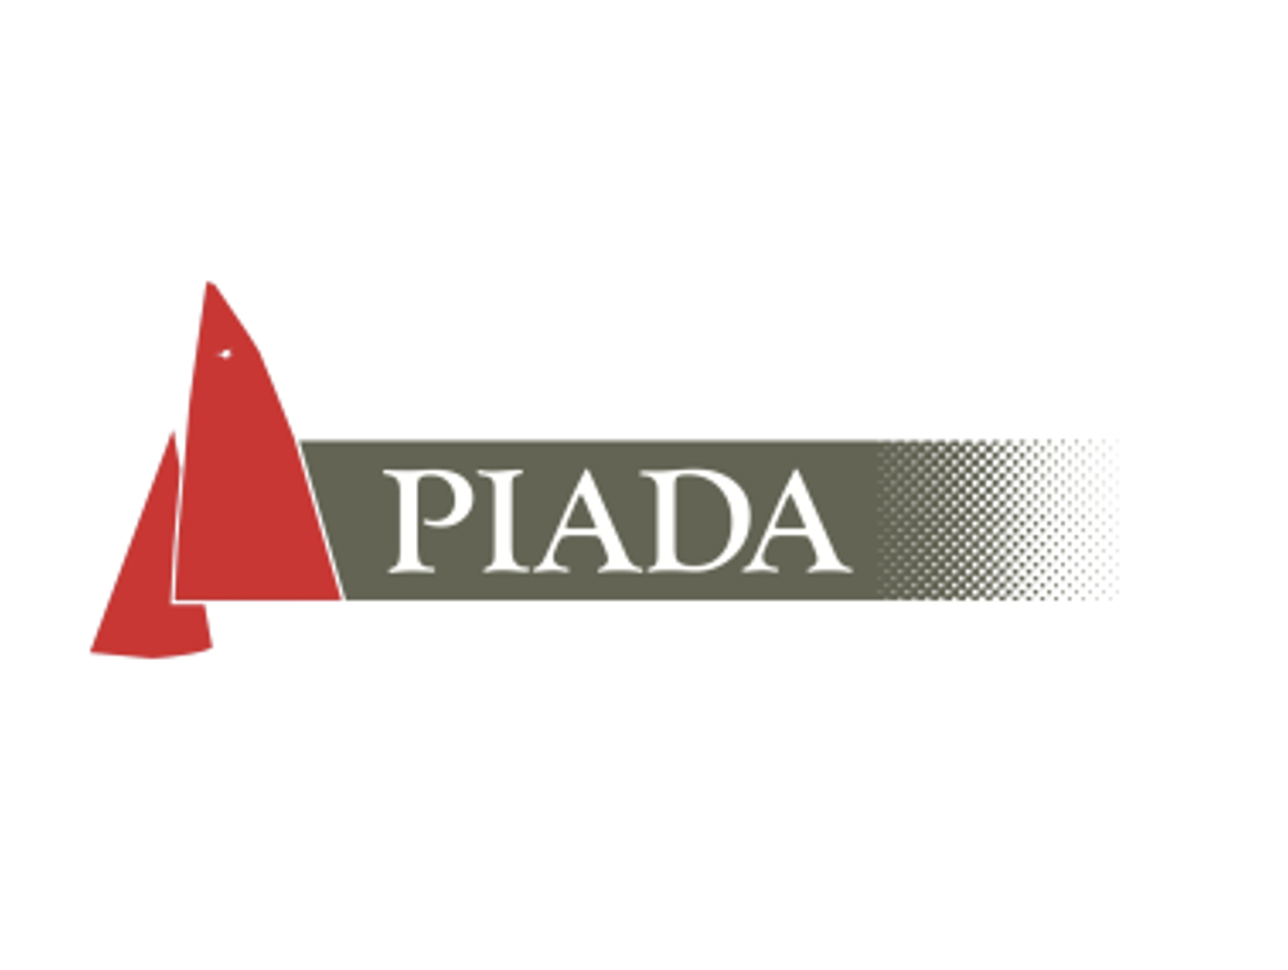 Piada Trophy – Regata Nazionale Riccione Image